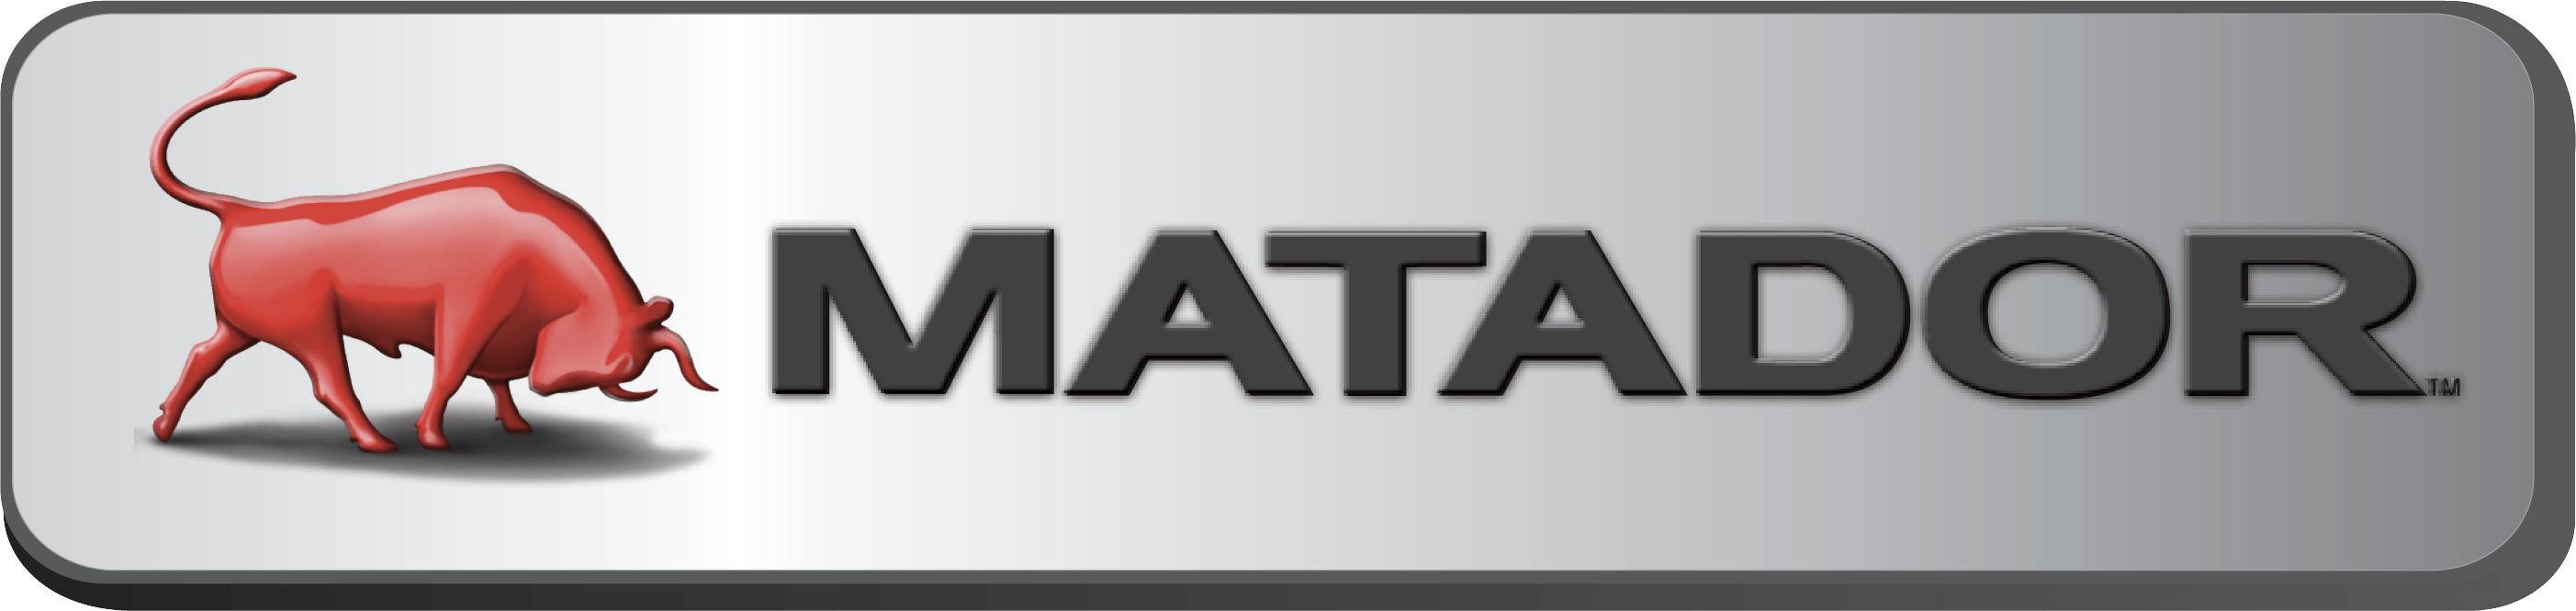 Matador Logo - Matador | BBQs & Barbecue Accessories Available At Bunnings